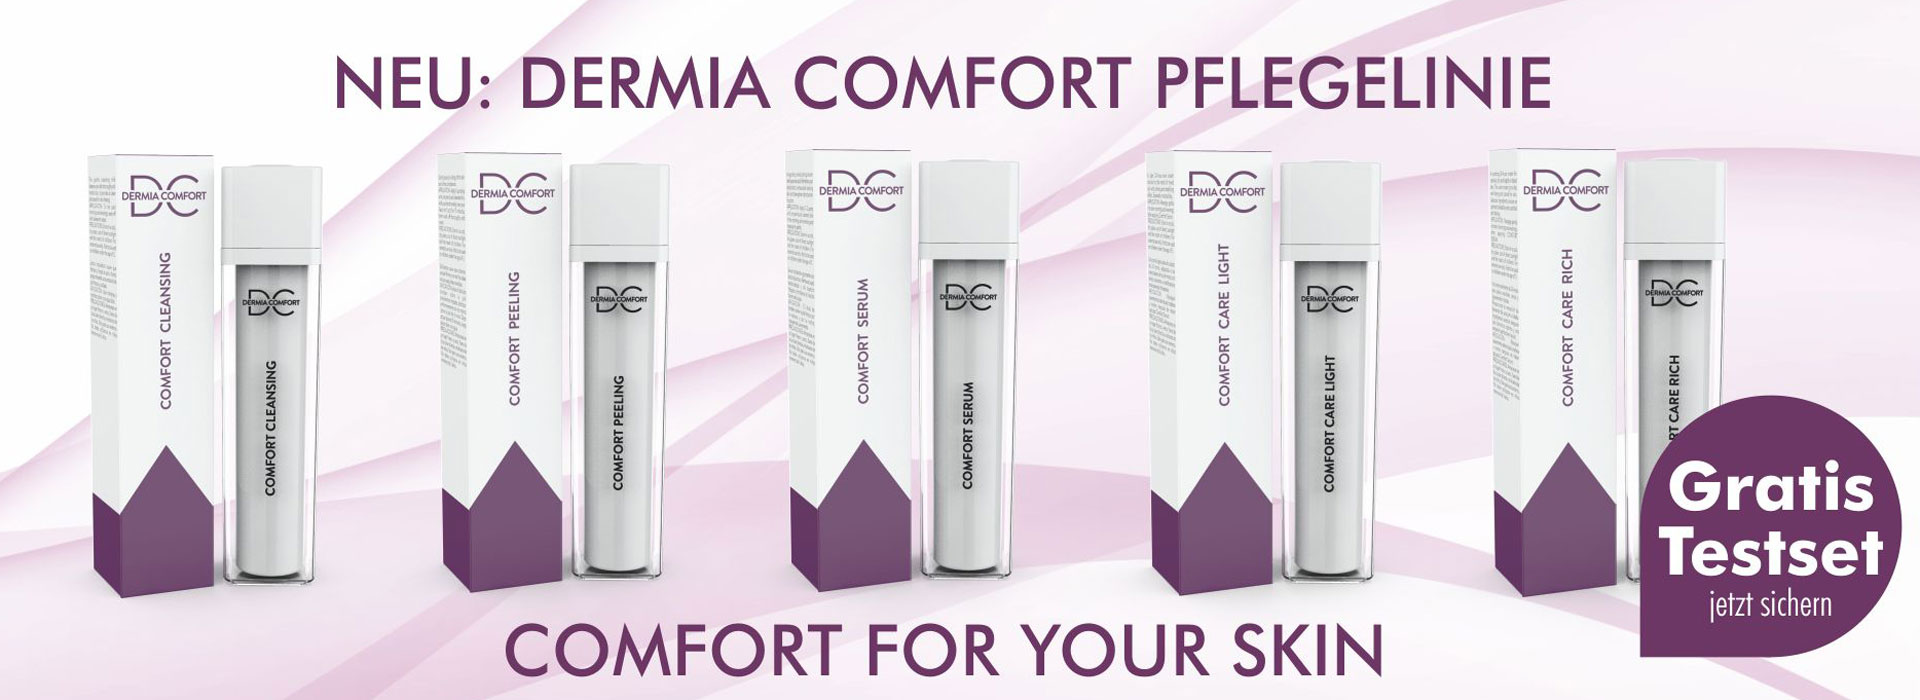 NEU im Sortiment Dermia Comfort